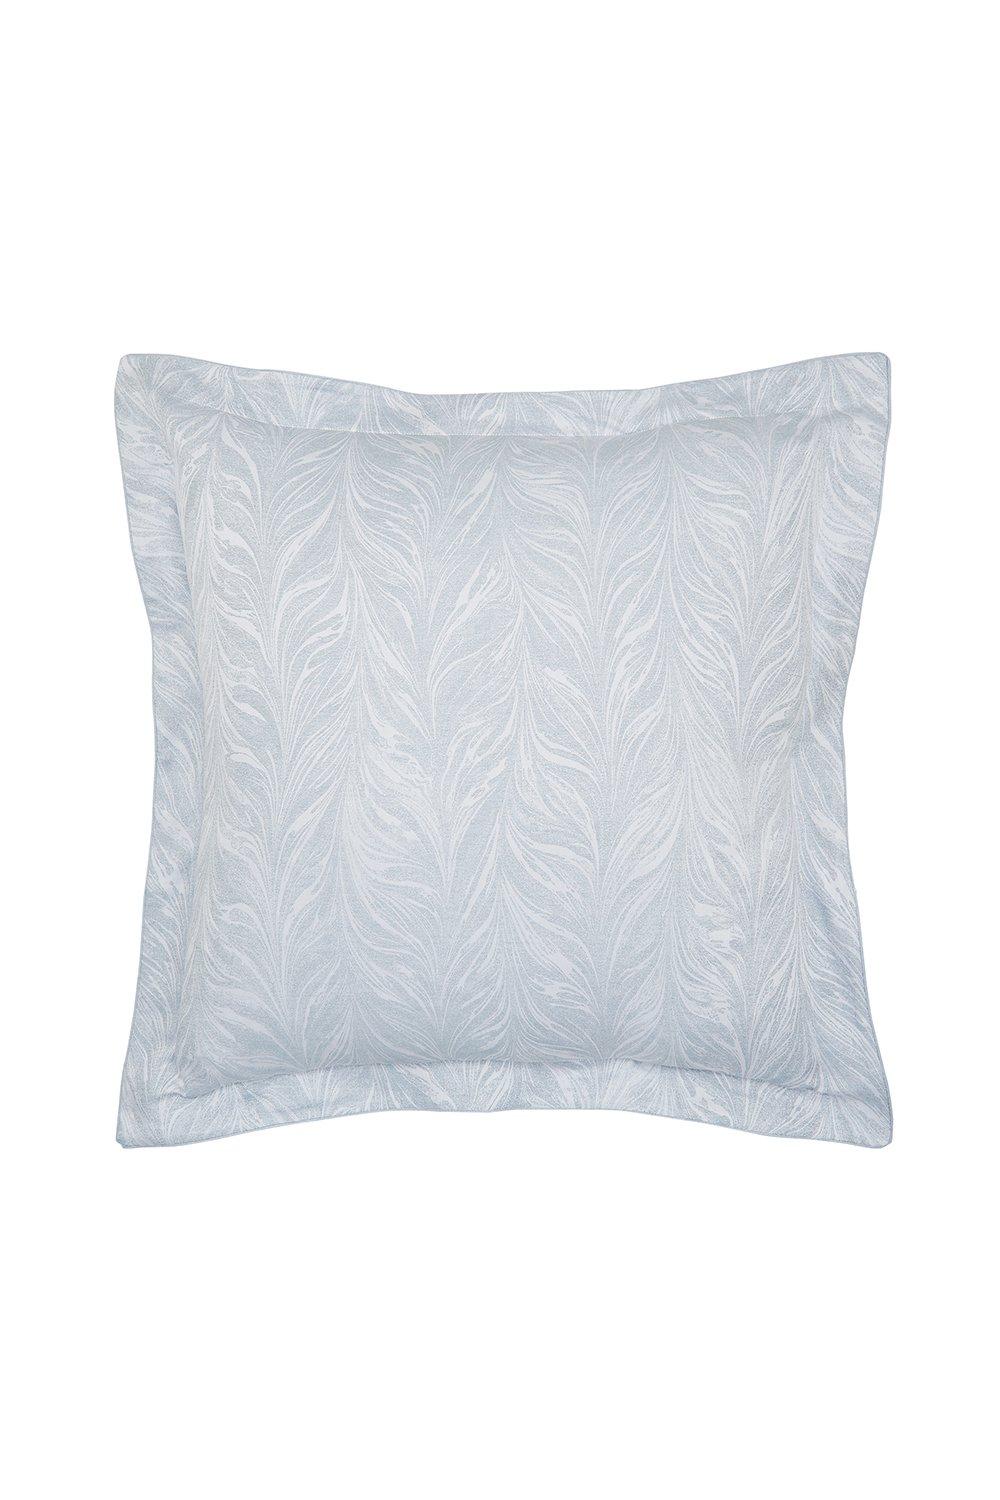 'Ebru' Cotton Sateen Square Pillowcase